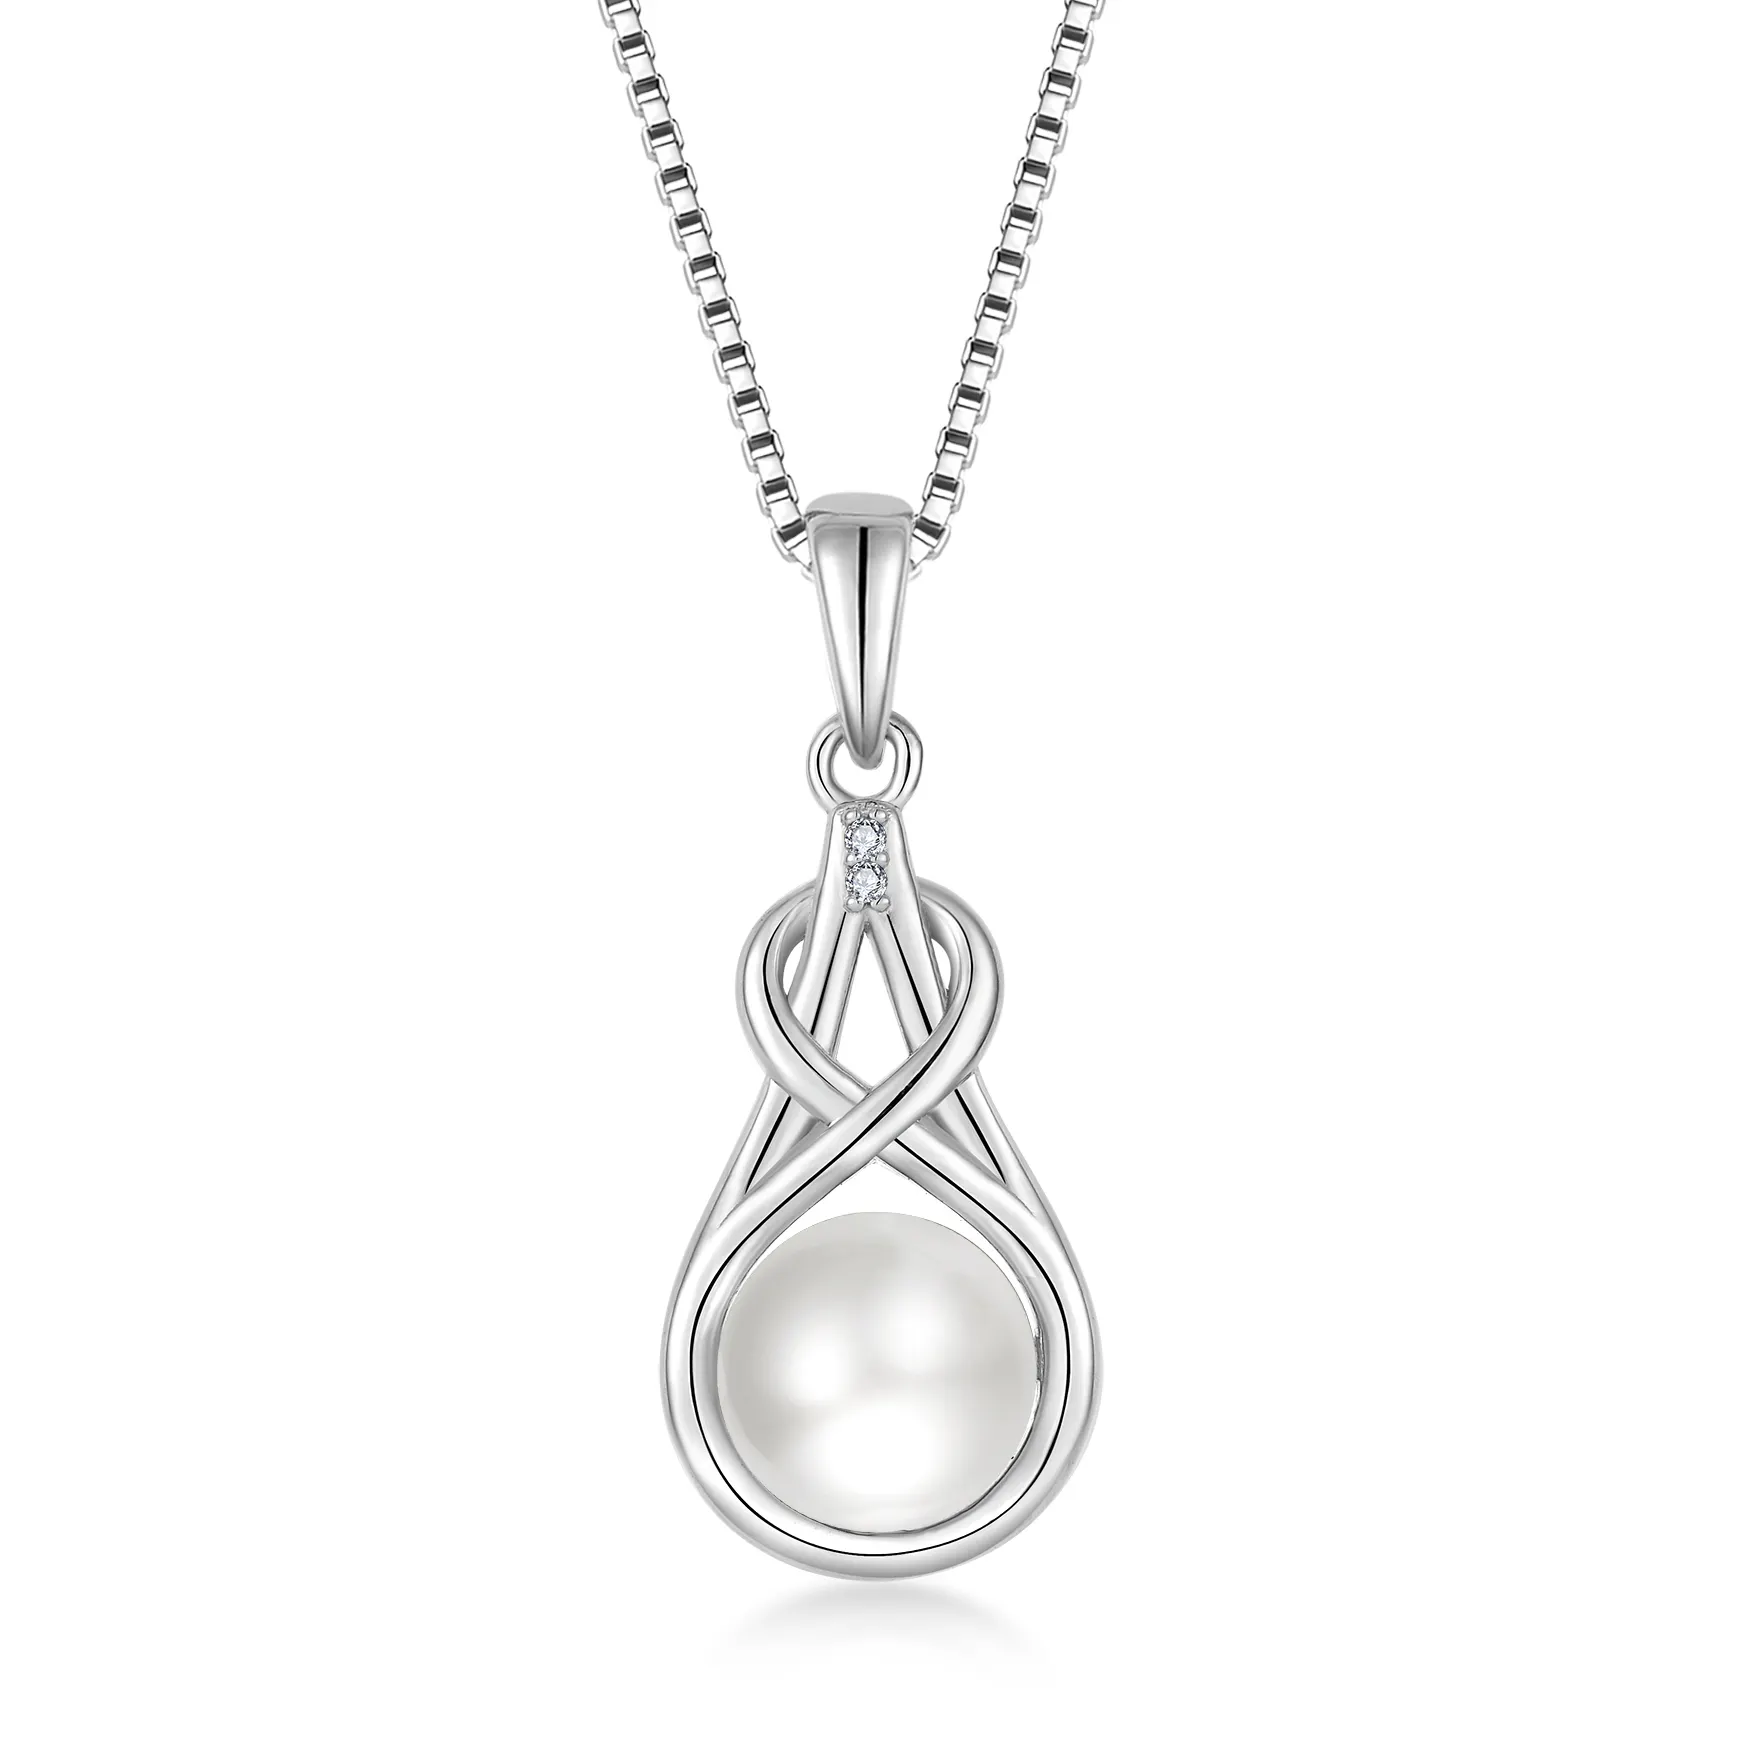 Cadena de caja hecha a mano de alta calidad, collar de perlas de agua dulce de naturaleza infinita de Plata de Ley 925 para mujer